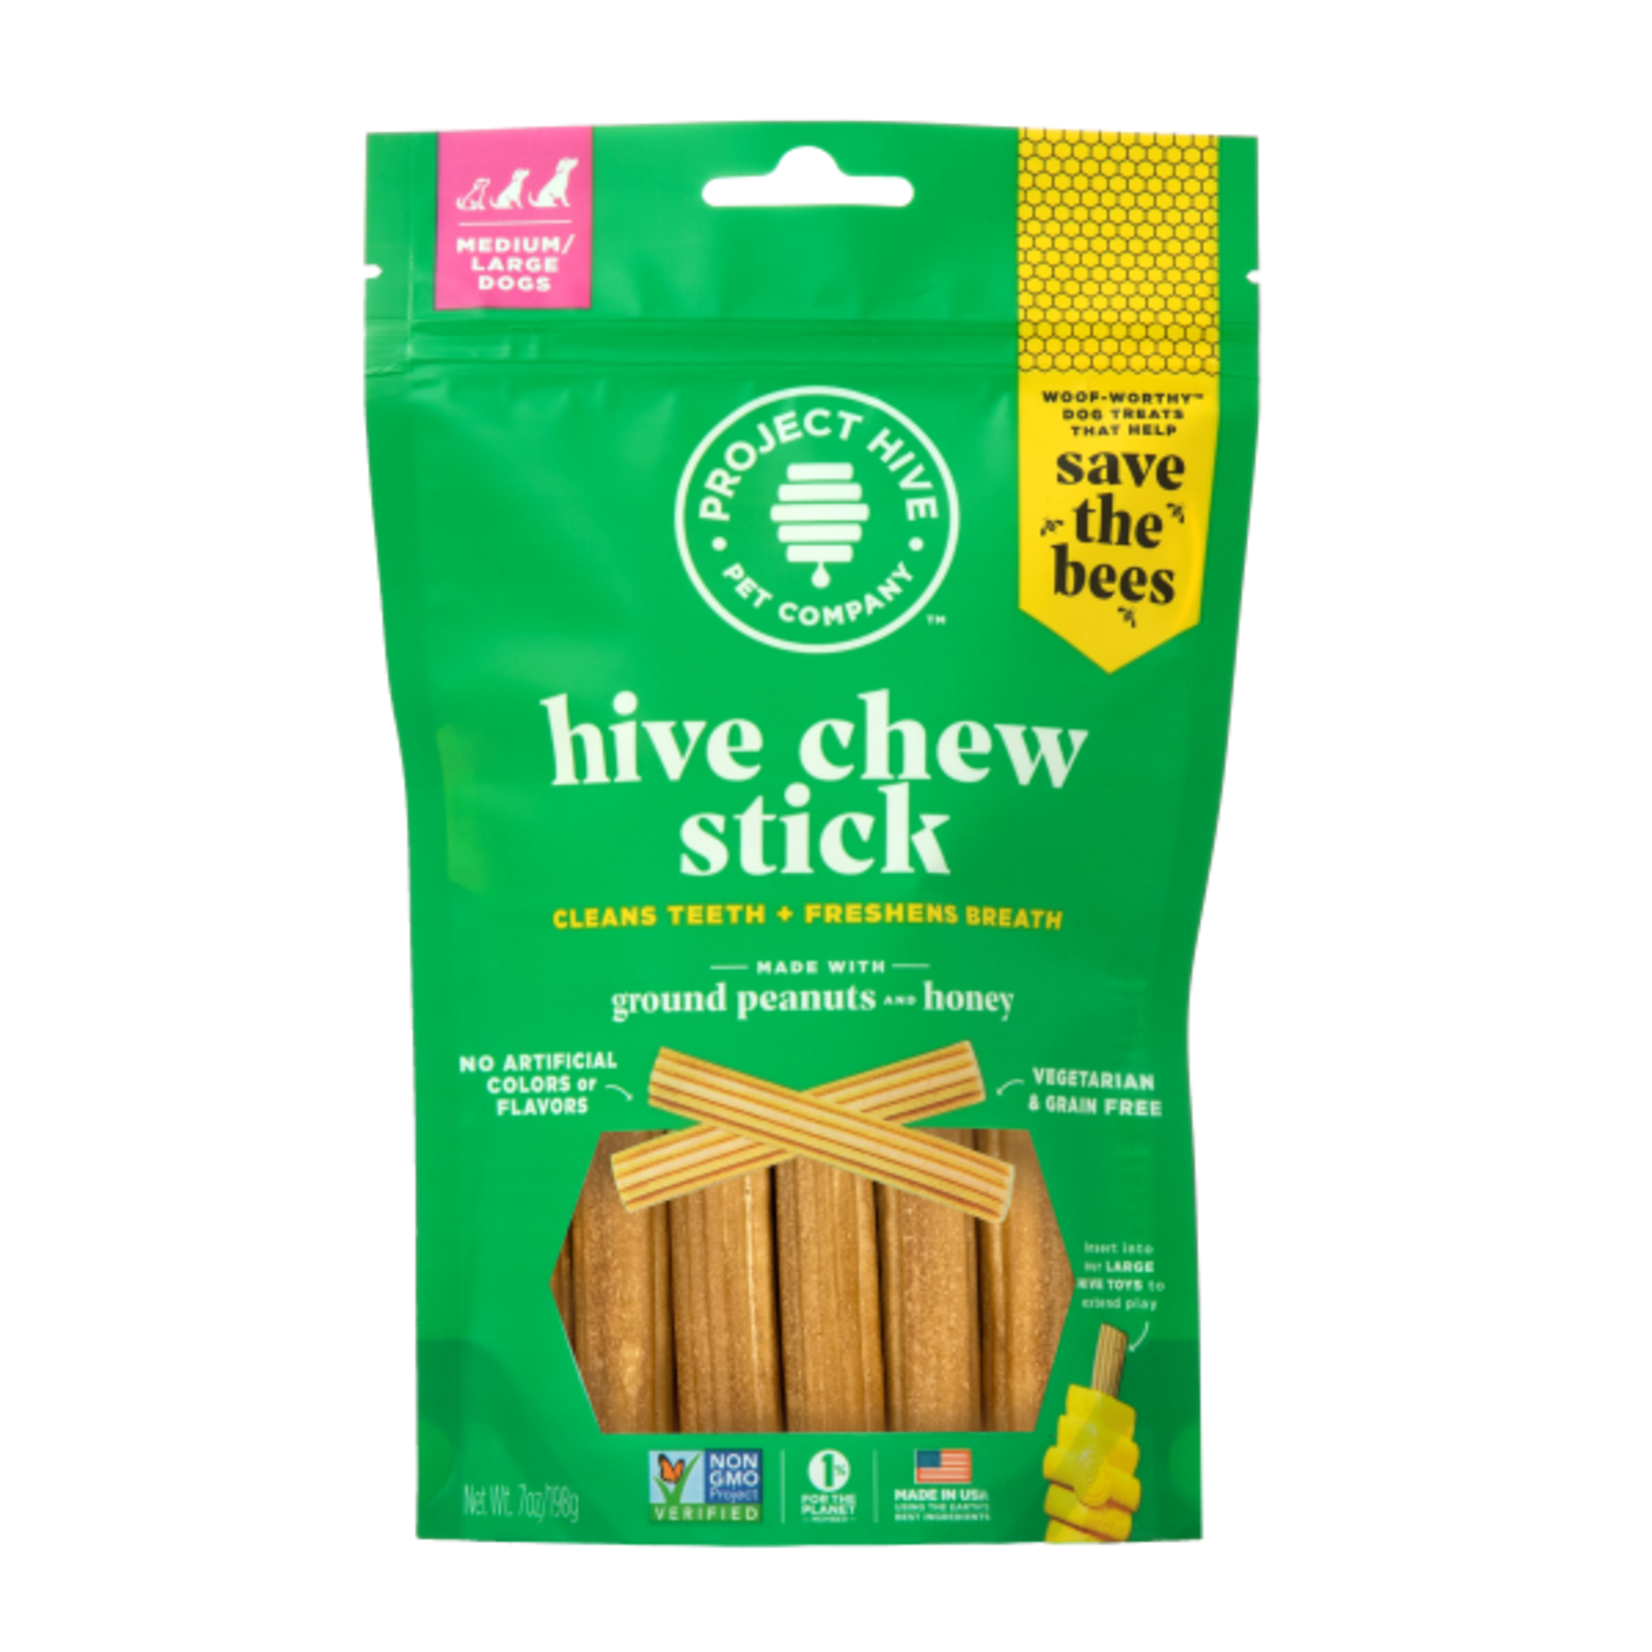 PROJECT HIVE Project Hive Chew Sticks Large 7 oz